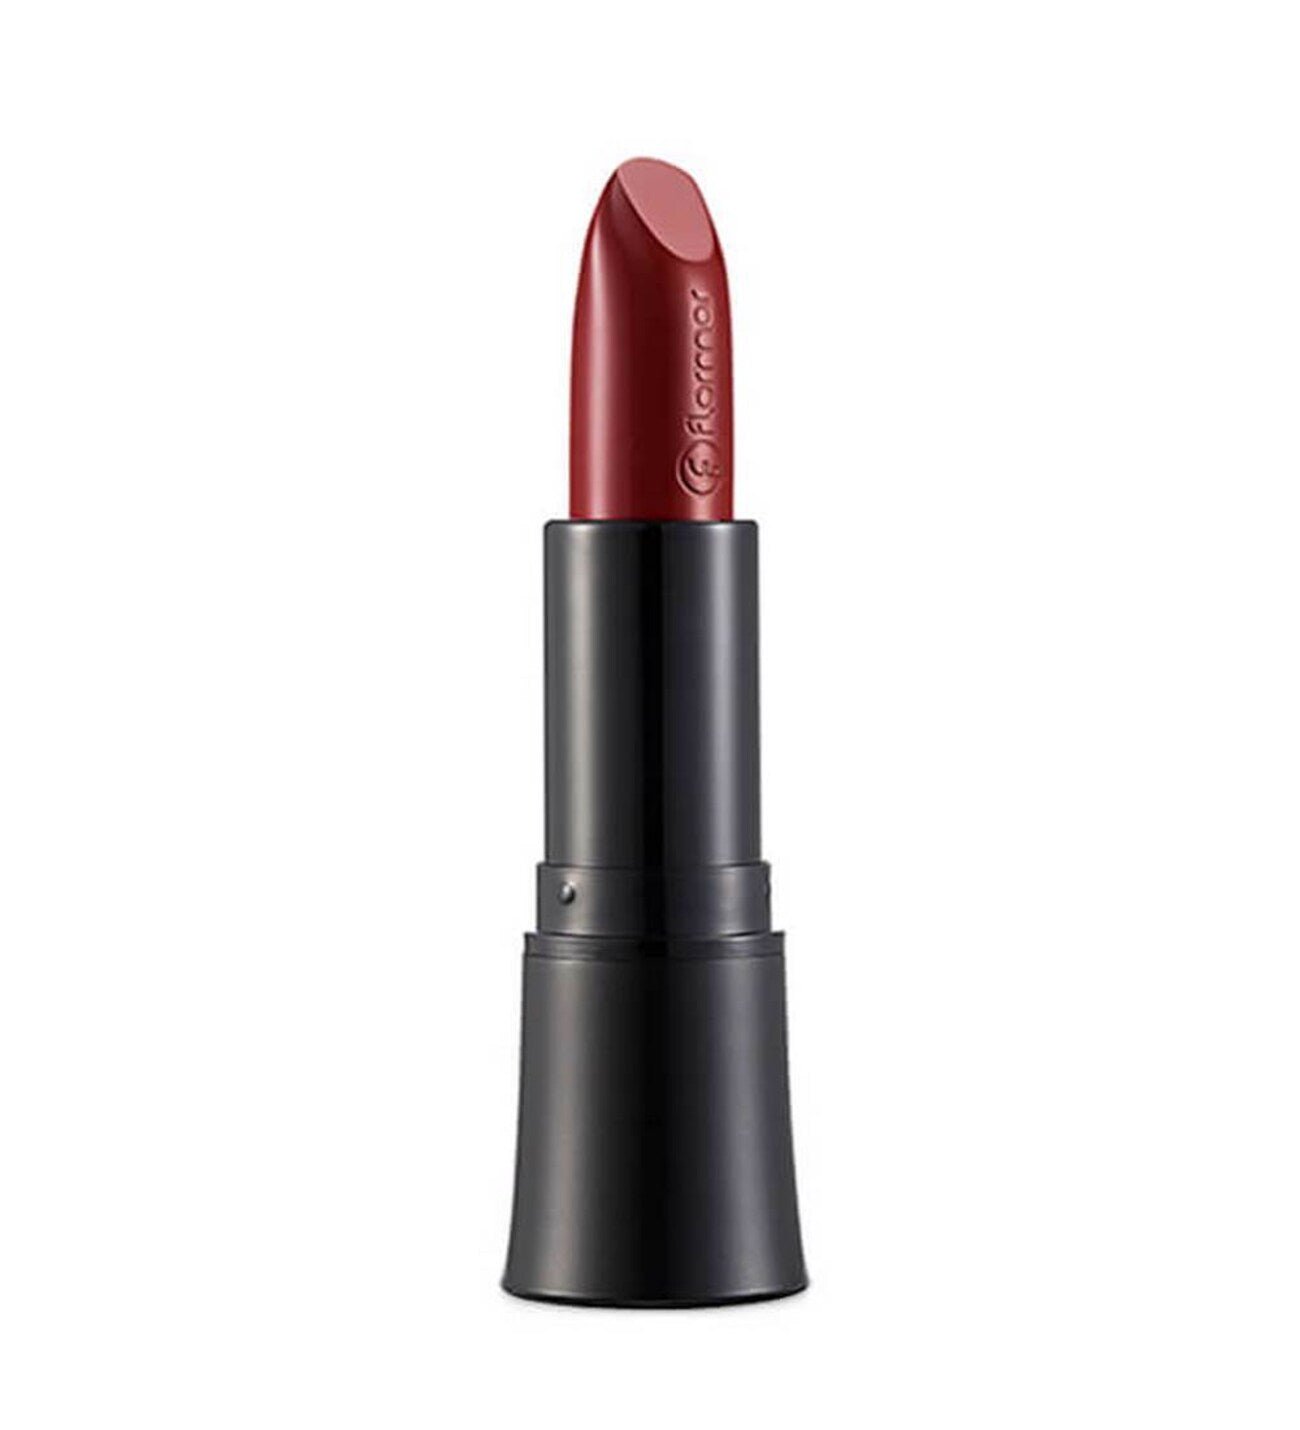 Flormar Super Shine Lipstick - 504 Red Chocolate - AllurebeautypkFlormar Super Shine Lipstick - 504 Red Chocolate